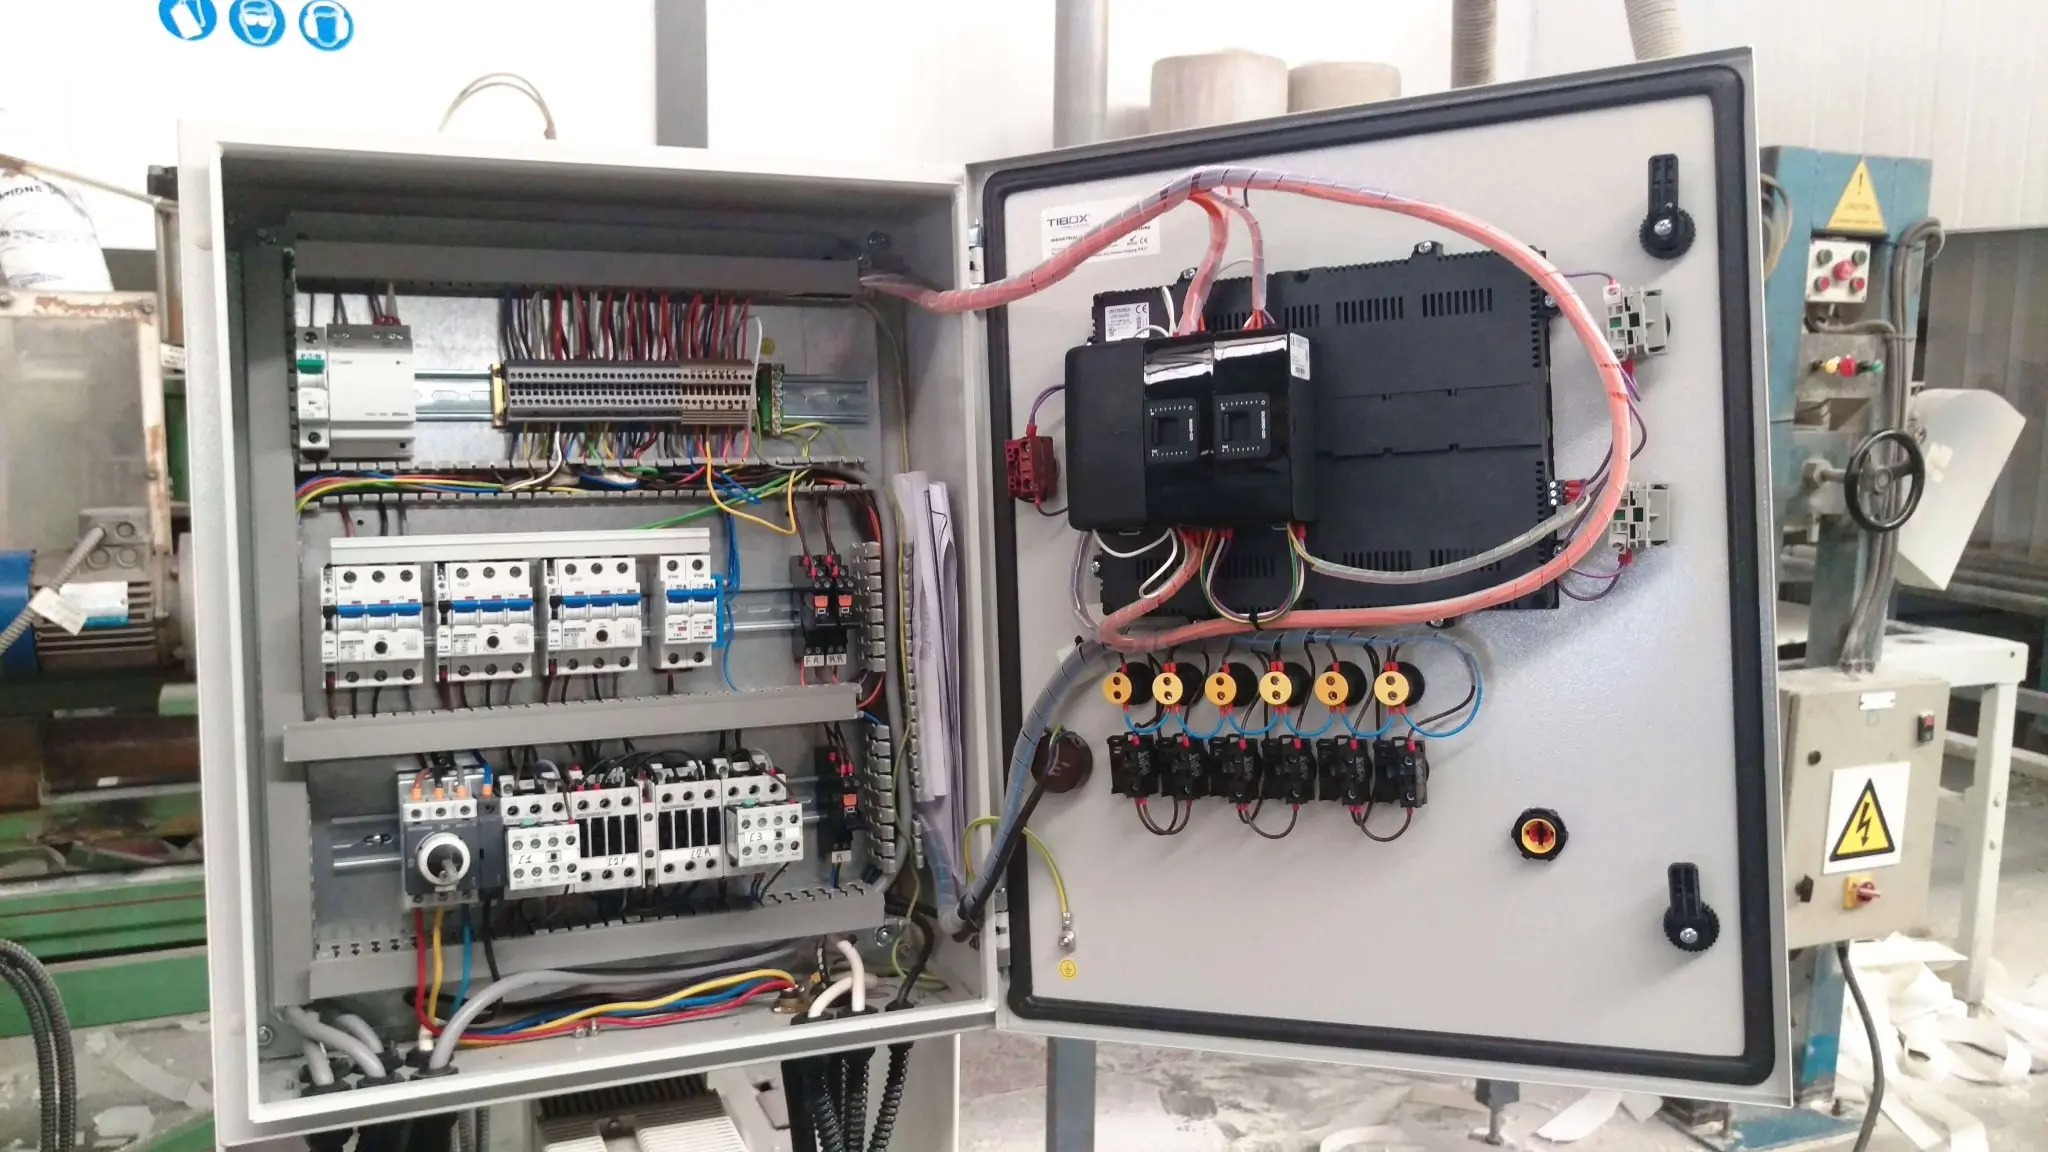 UniStream 10.4-inch programmable logic controller +HMI at Nicolaides & Kountouris Metal Company